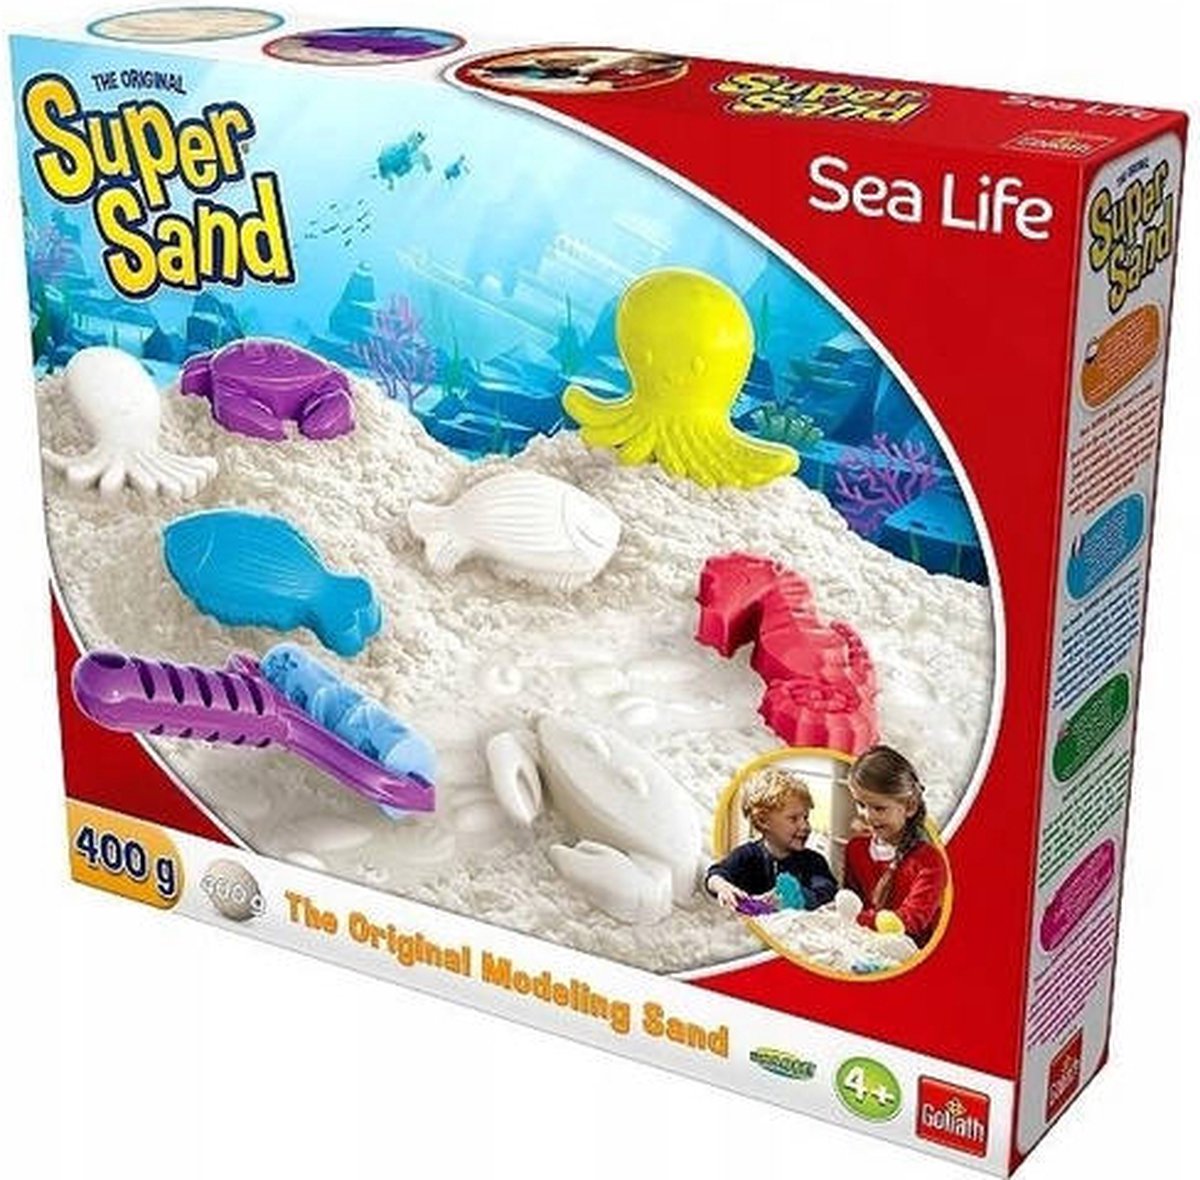 Goliath Super Sand - Sea Life - Speelzand 400 gram + accessoires